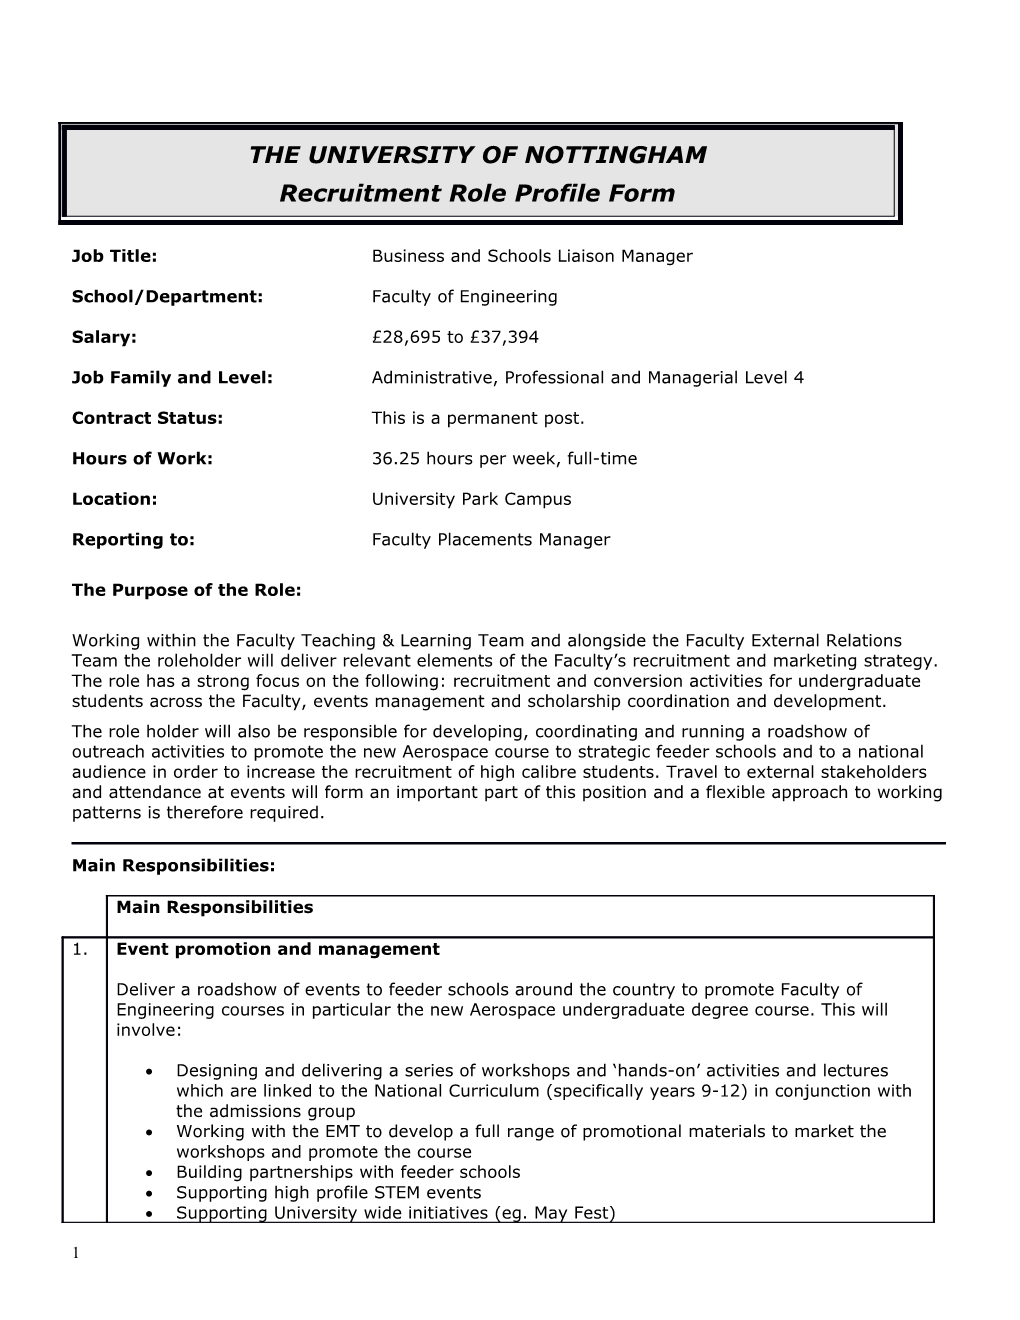 Recruitment Role Profile Form s1